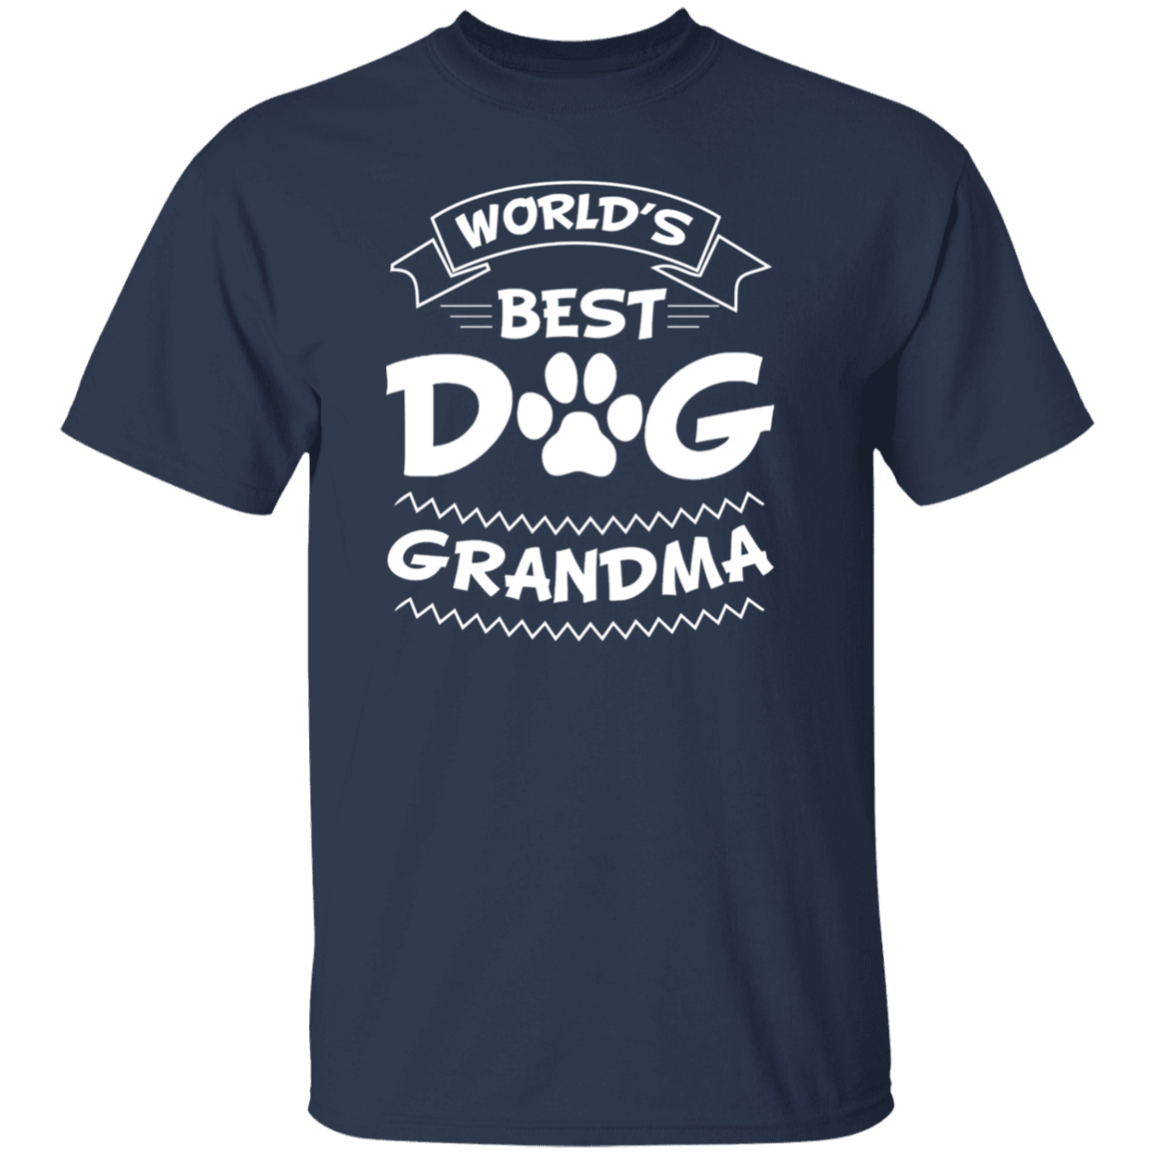 World's Best Dog Grandma - T Shirt.